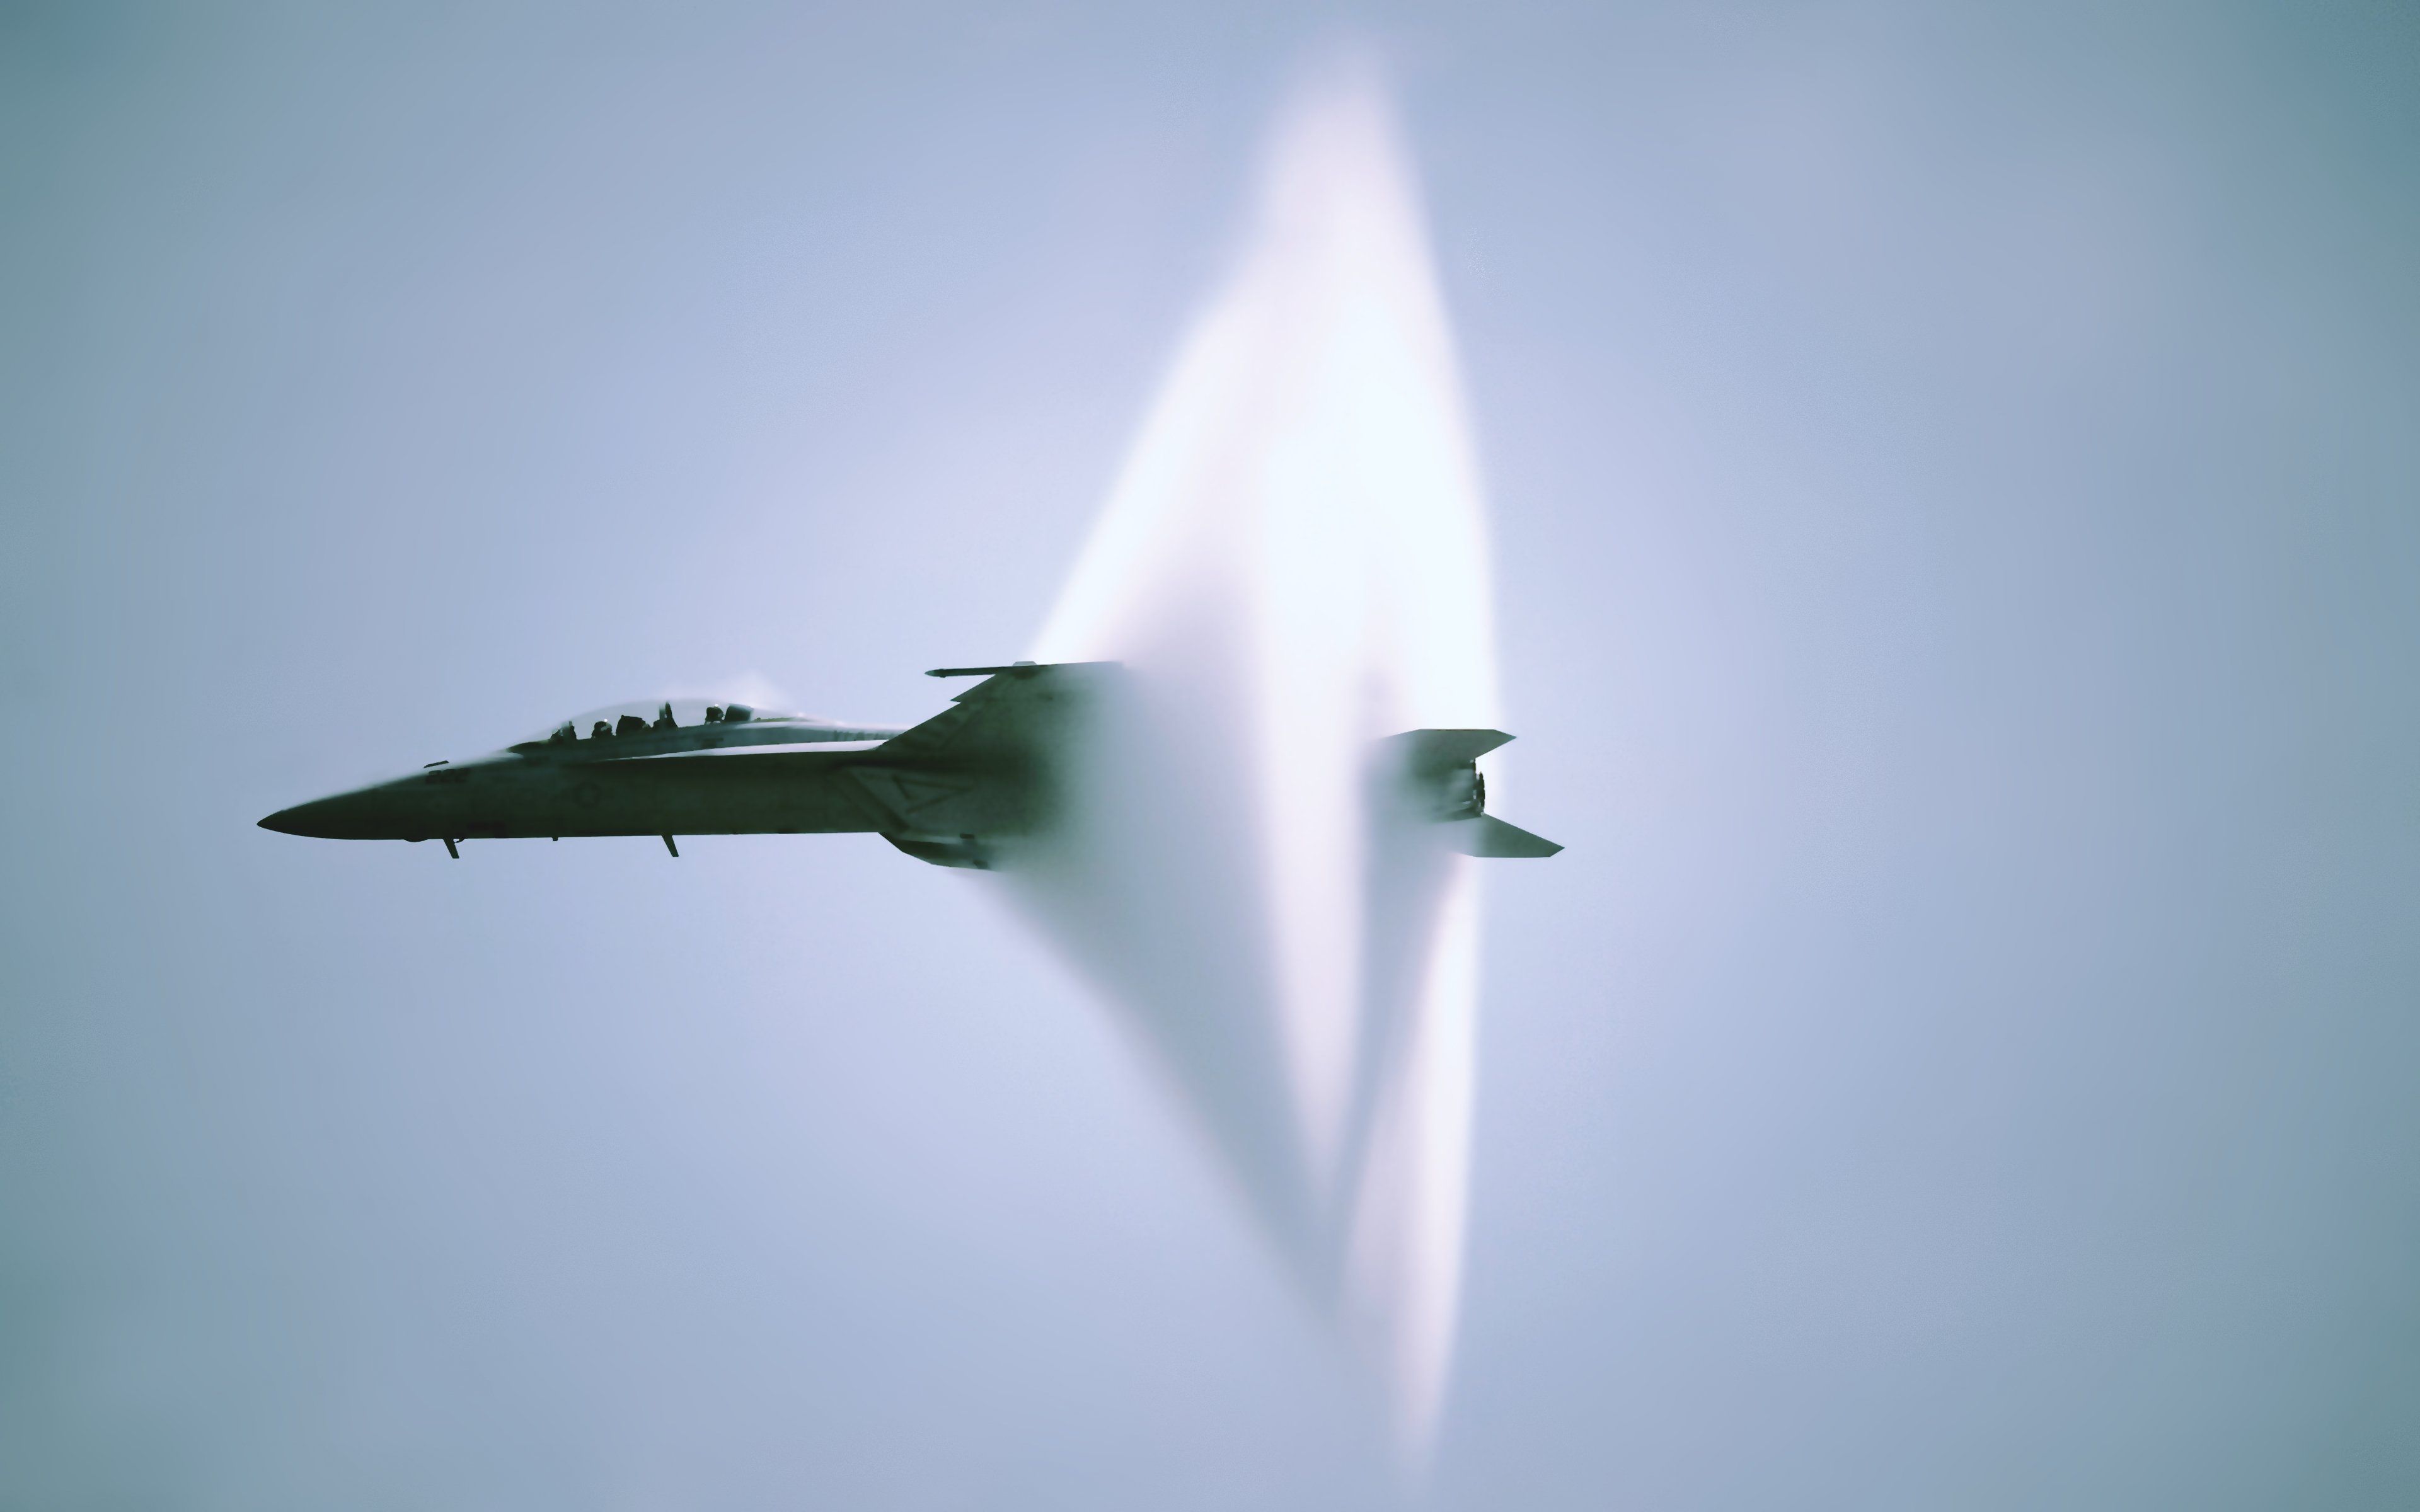 FA 18 Super Hornet sound barrier plane aircrafts sky fighter